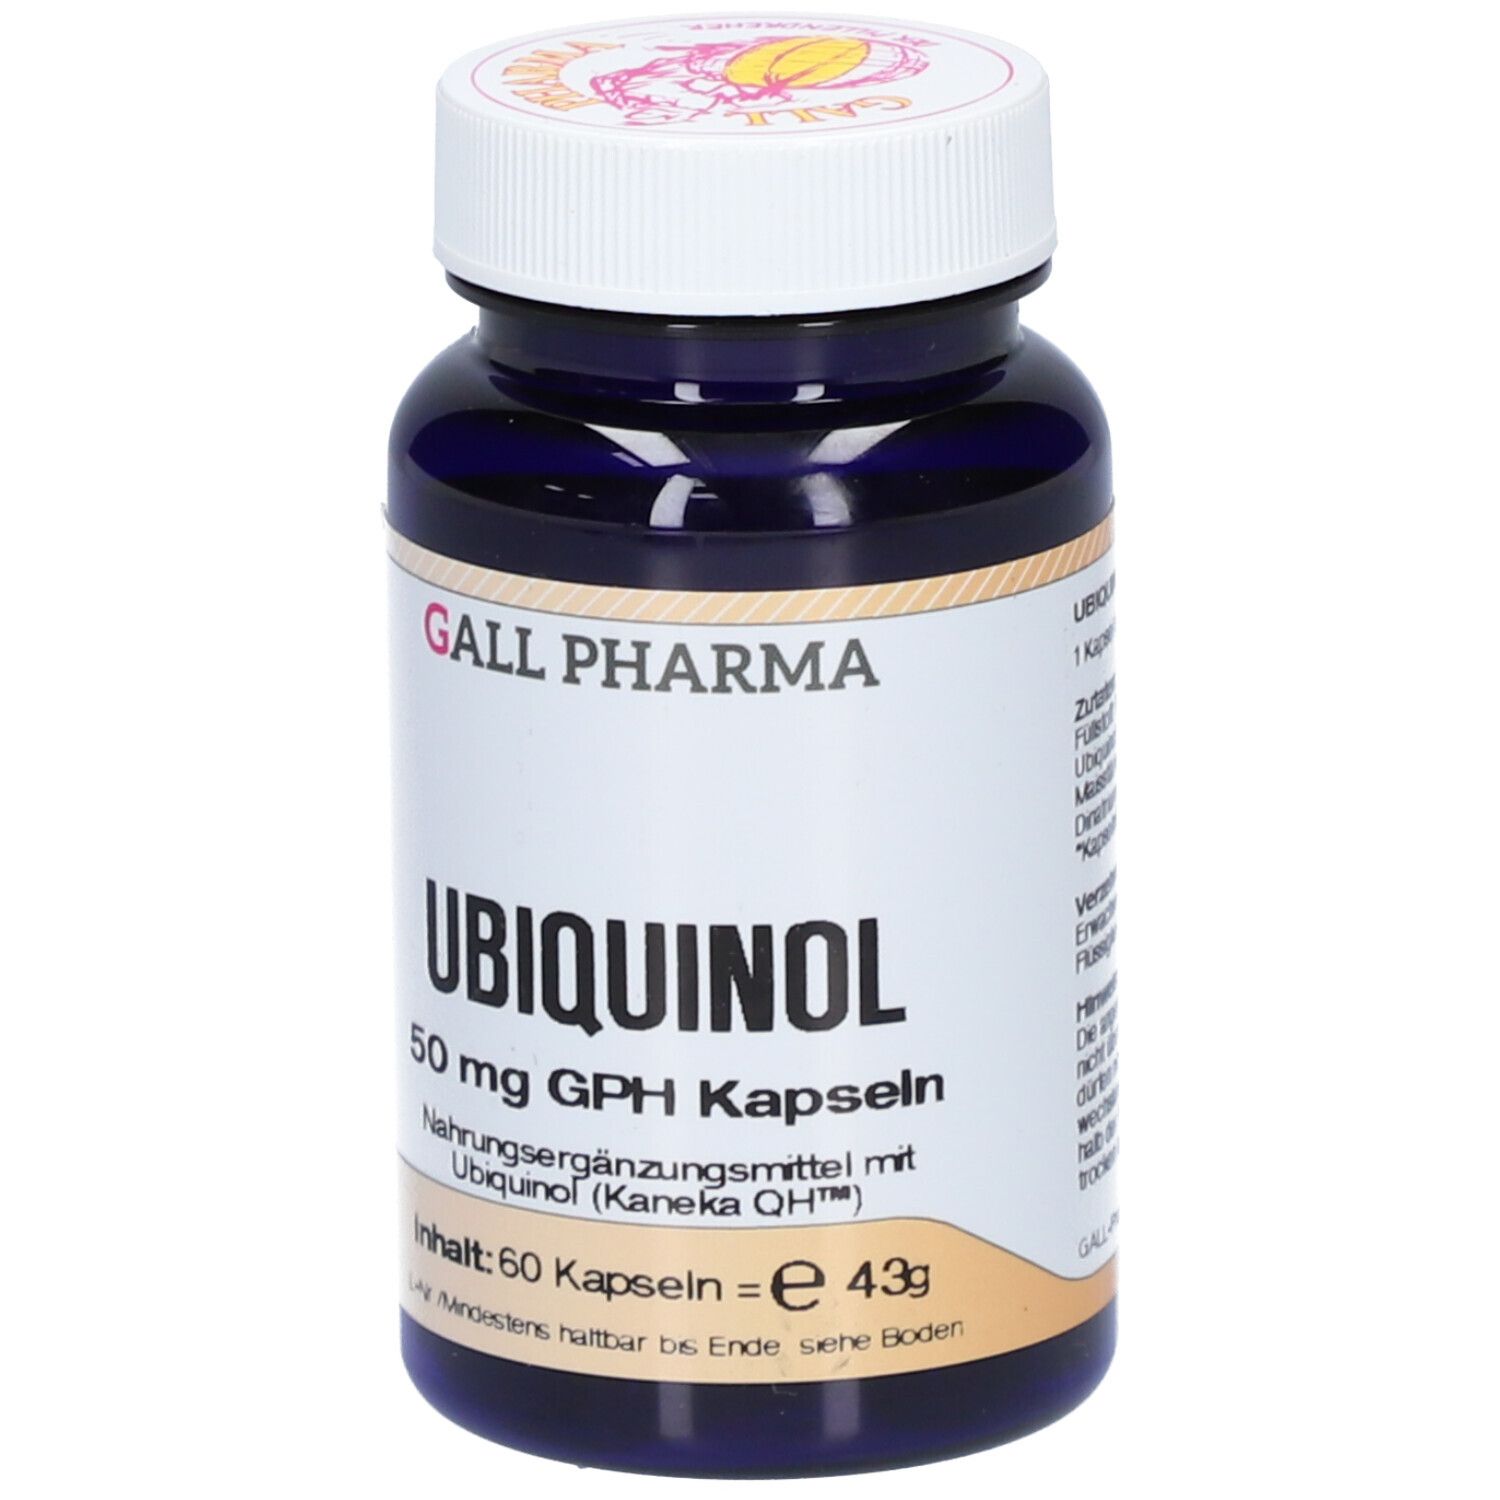 GALL PHARMA UBIQUINOL 50 mg GPH Kapseln